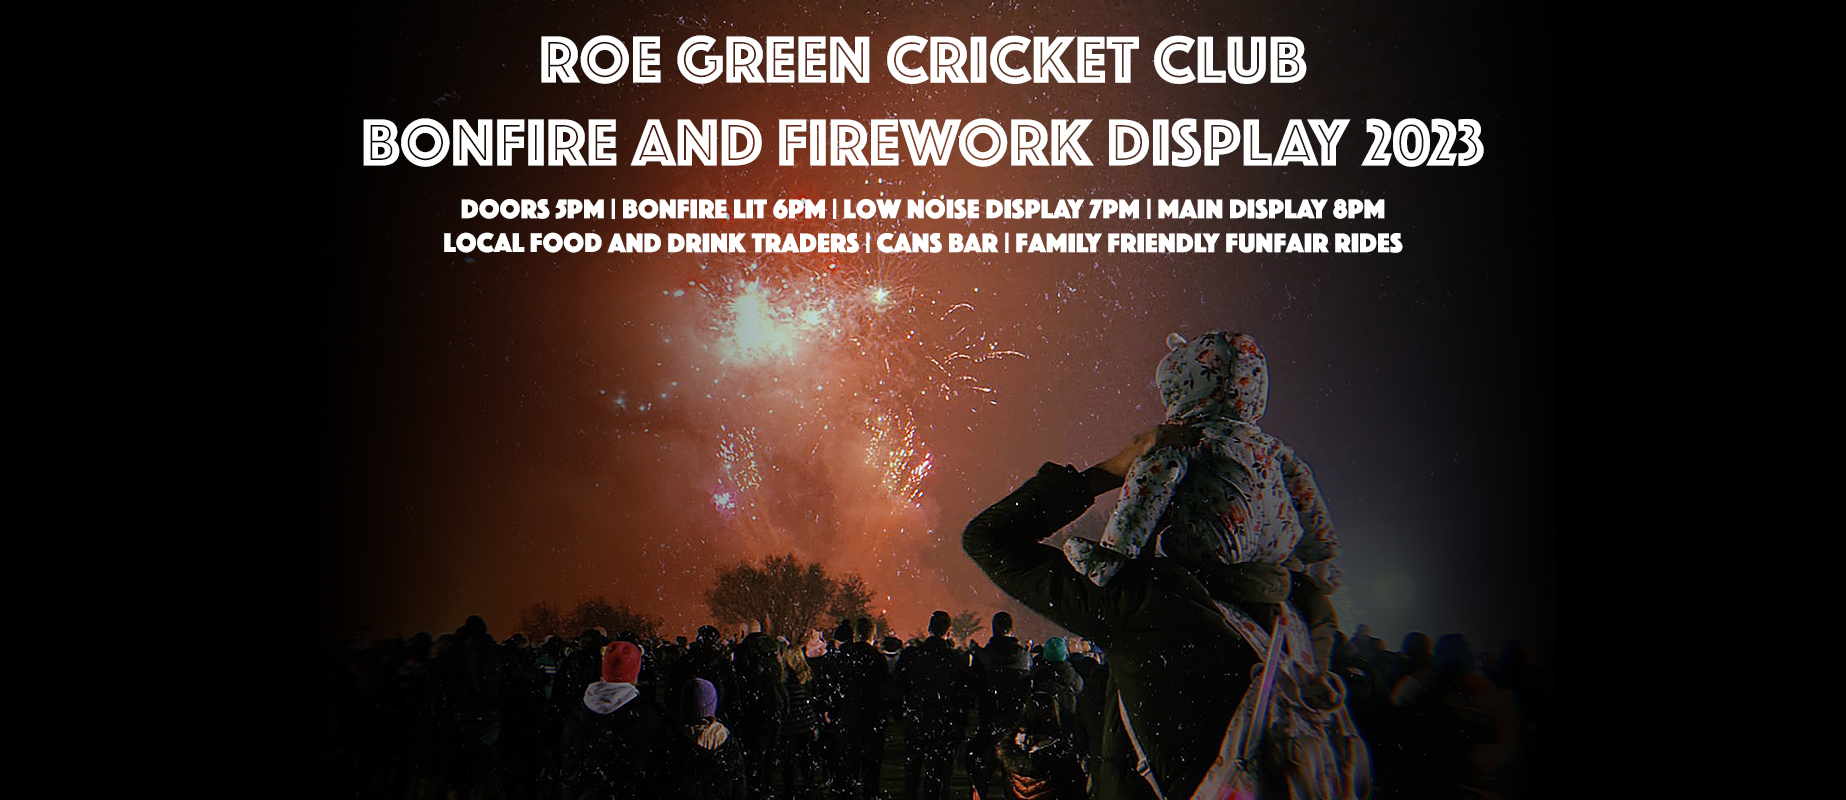 Roe Green Cricket Club - Bonfire and Firework Display 2023